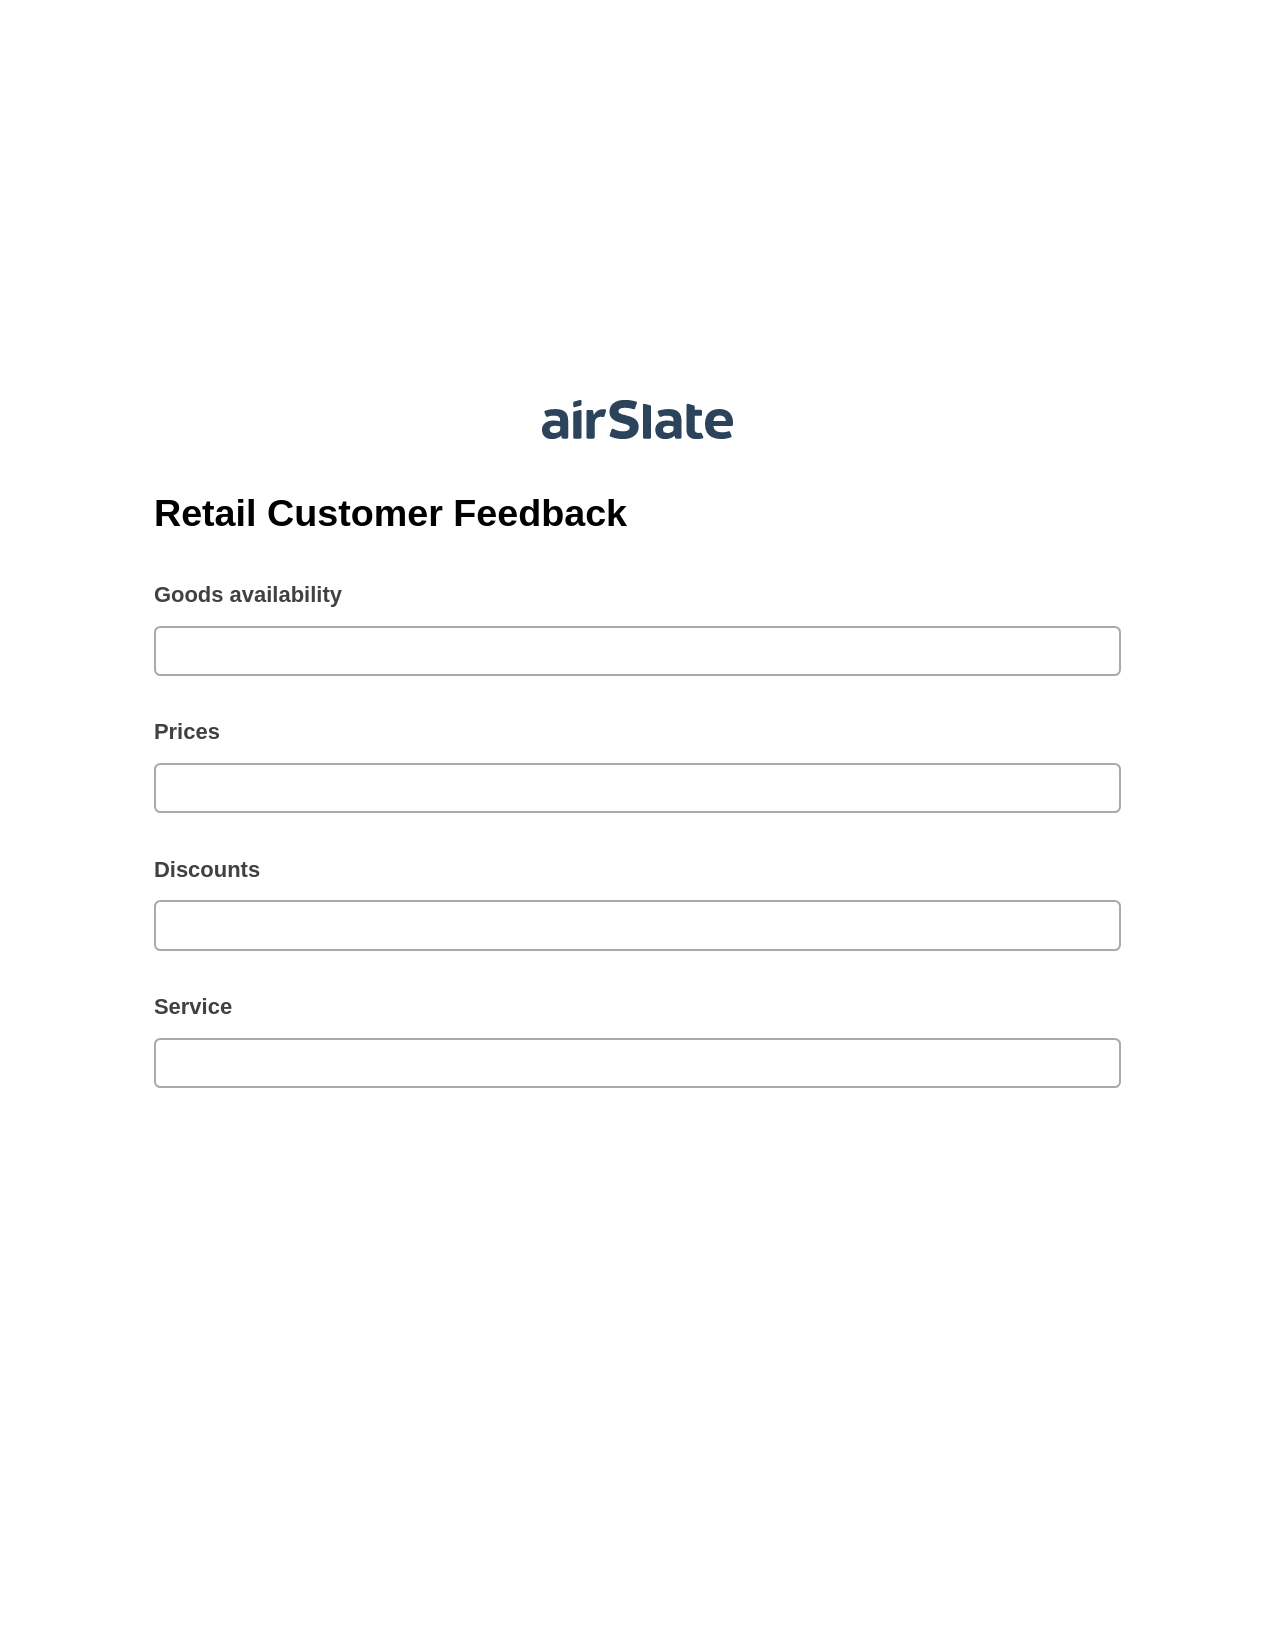 Multirole Retail Customer Feedback Pre-fill from CSV File Bot, Update NetSuite Records Bot, Slack Notification Postfinish Bot